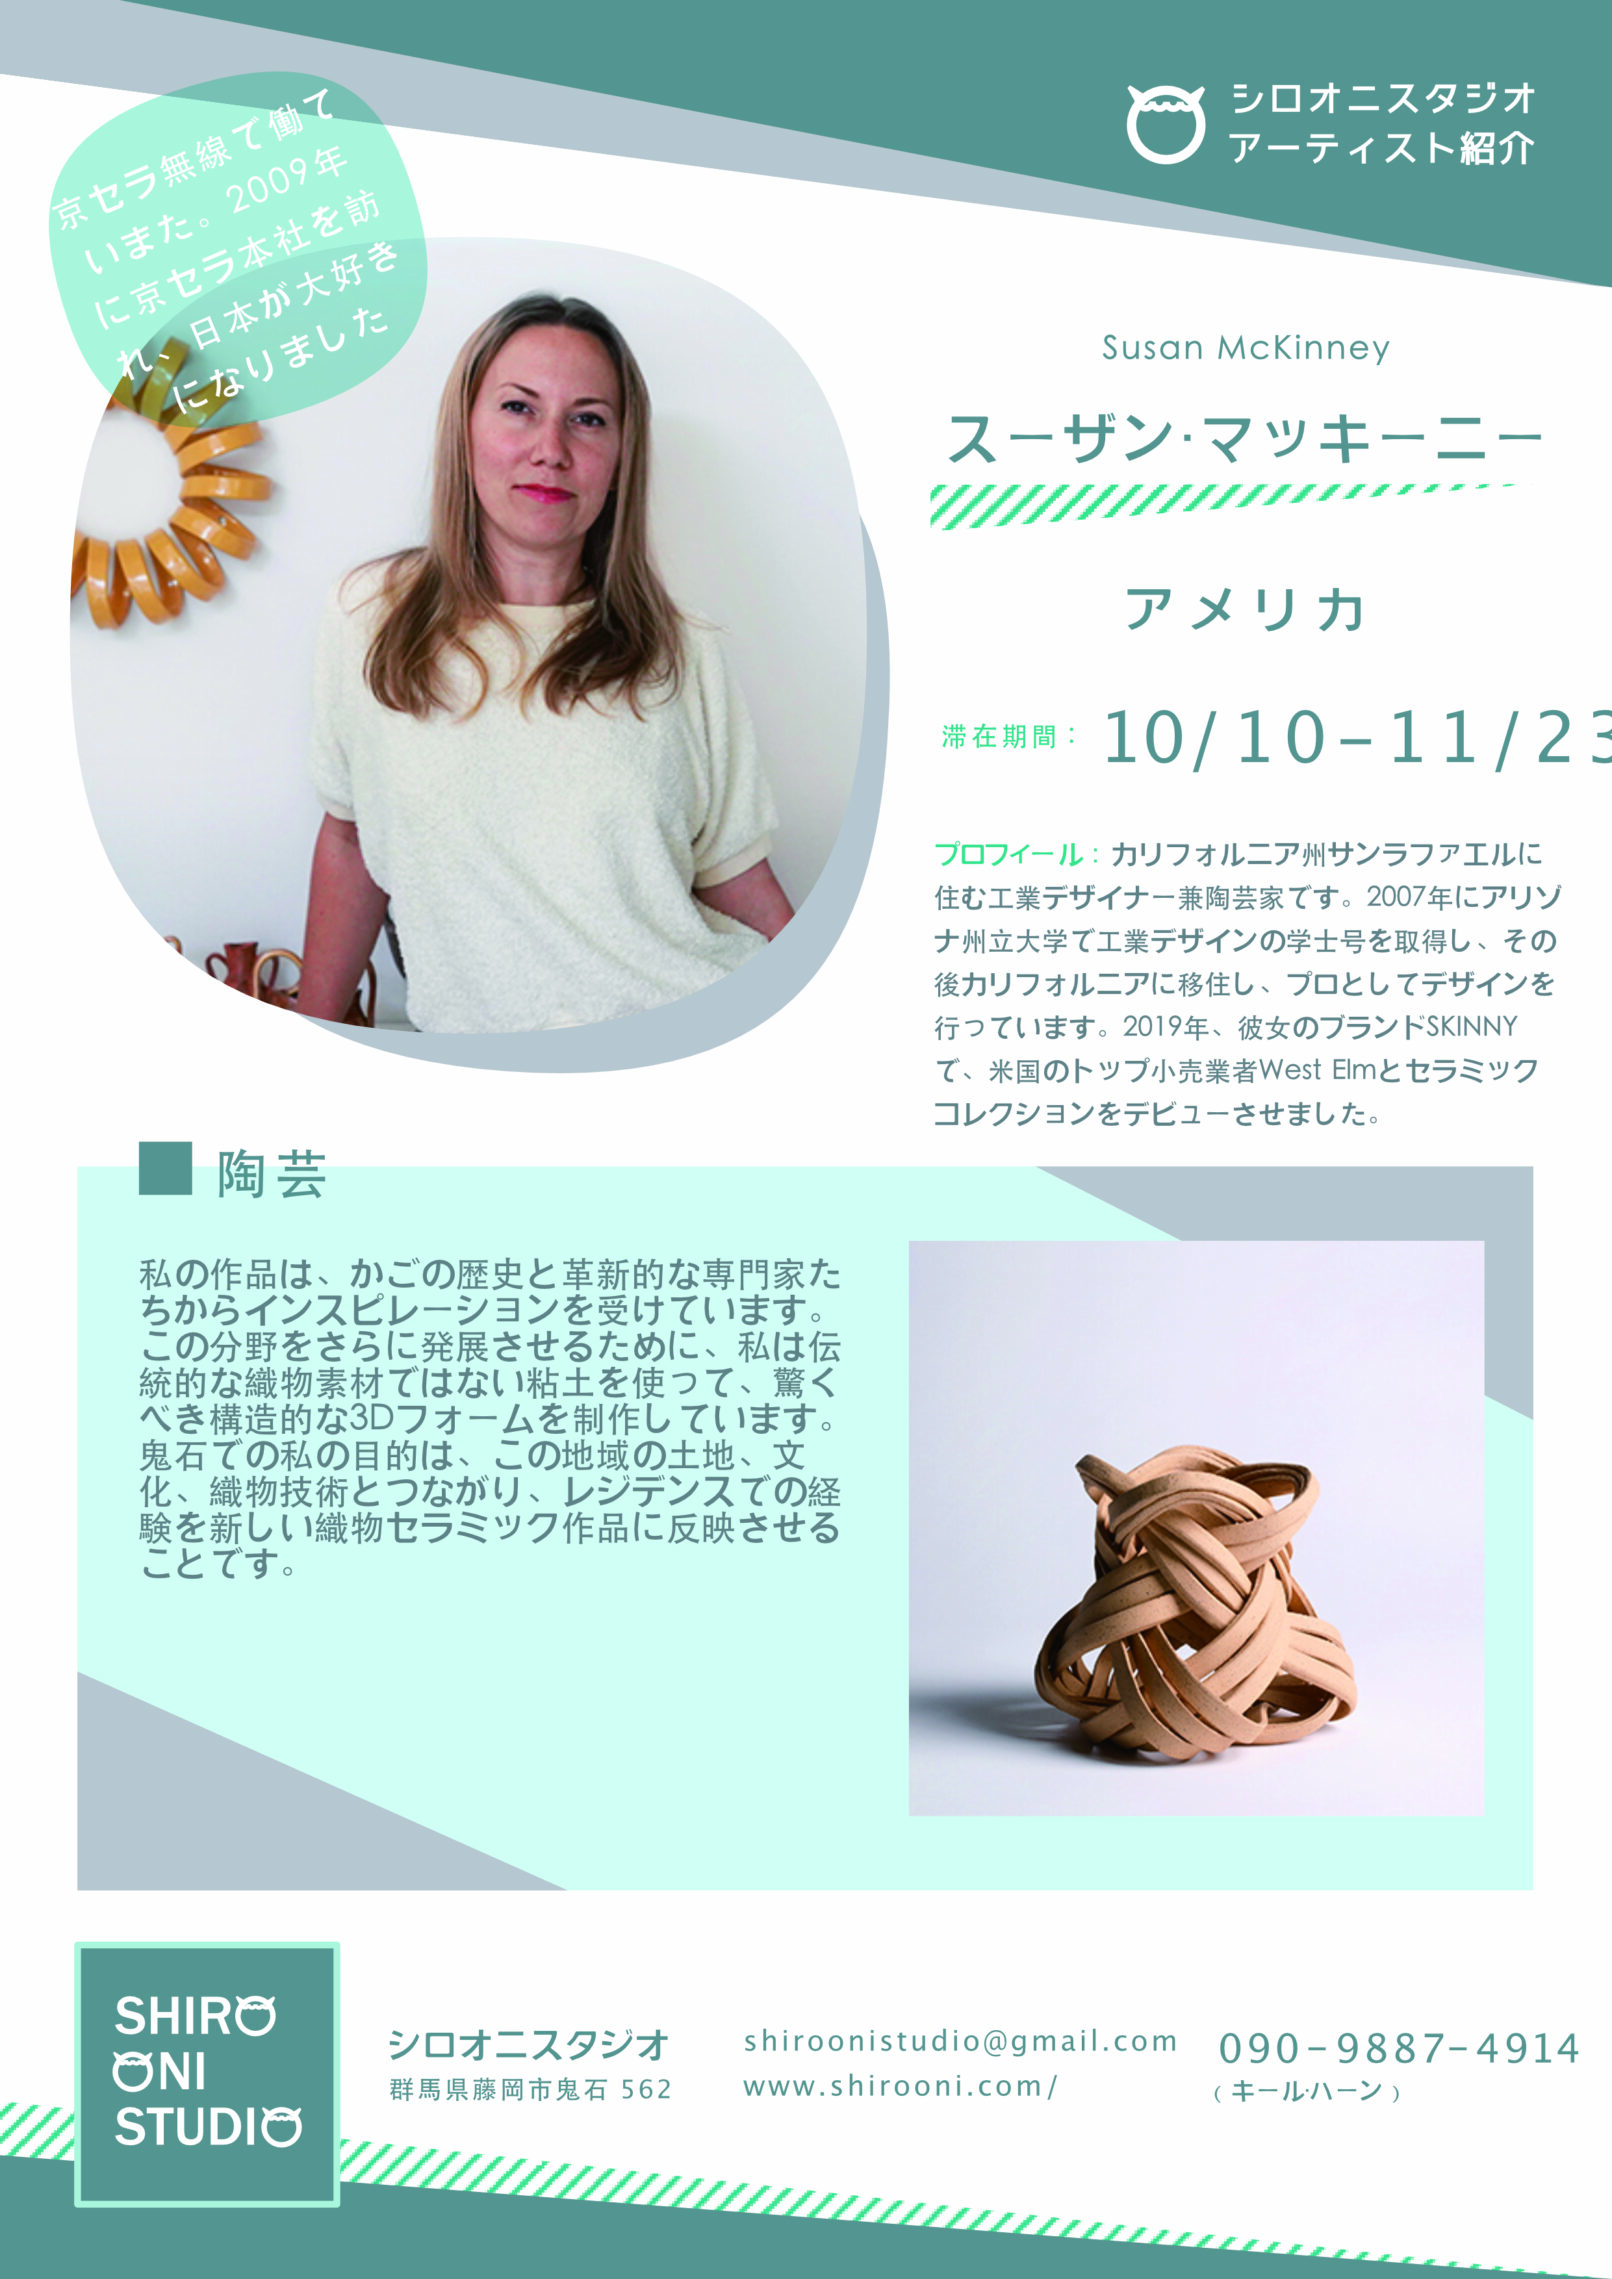 Ceramic Sculptor Susan McKinney Artist Profile at Shiro Oni Studio